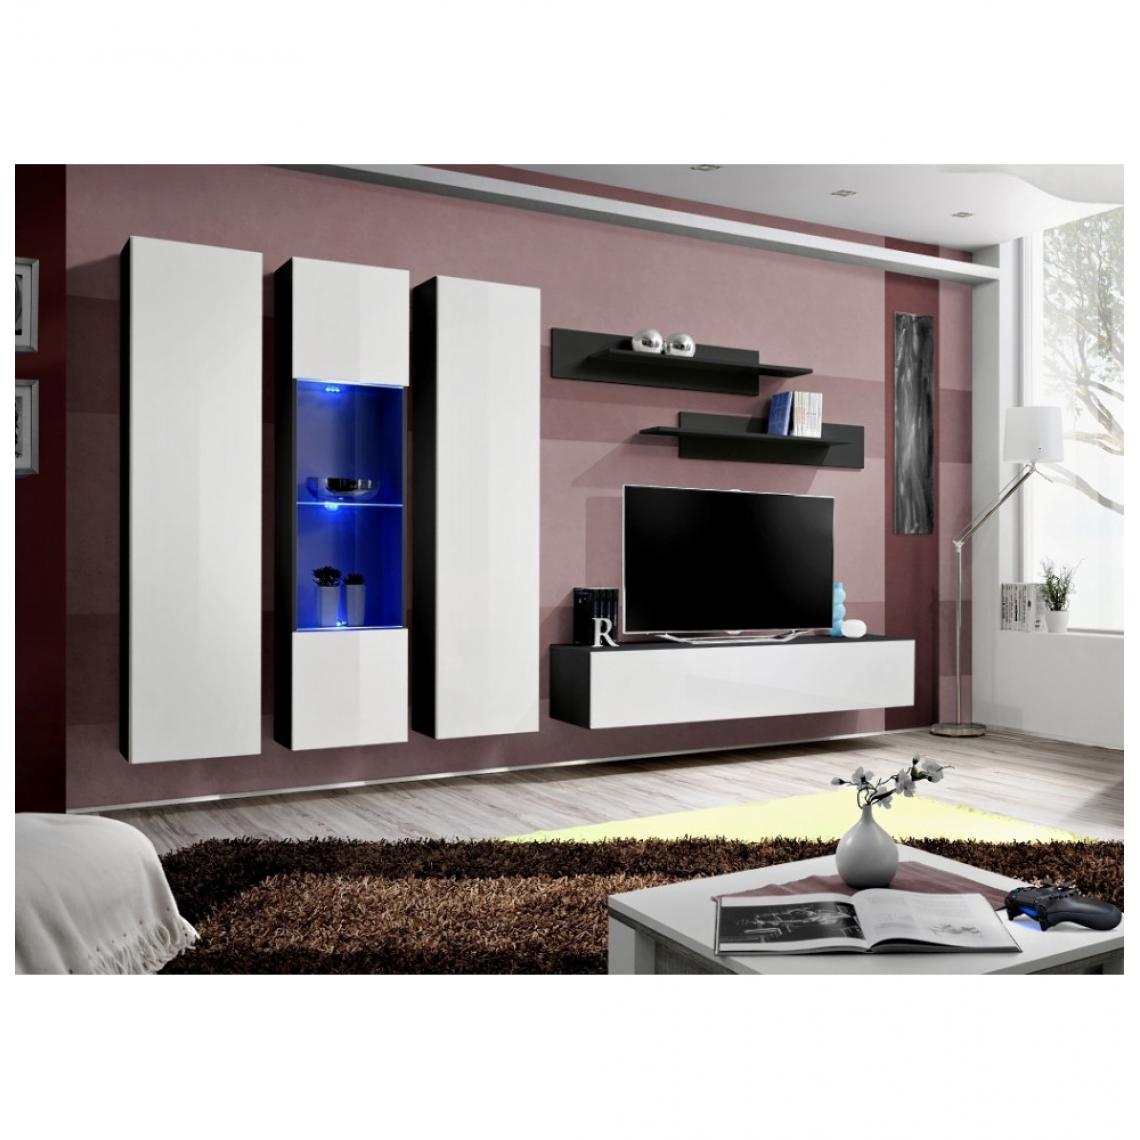 Ac-Deco - Ensemble meuble TV mural - Fly V - 310 cm x 190 cm x 40 cm - Noir et blanc - Meubles TV, Hi-Fi